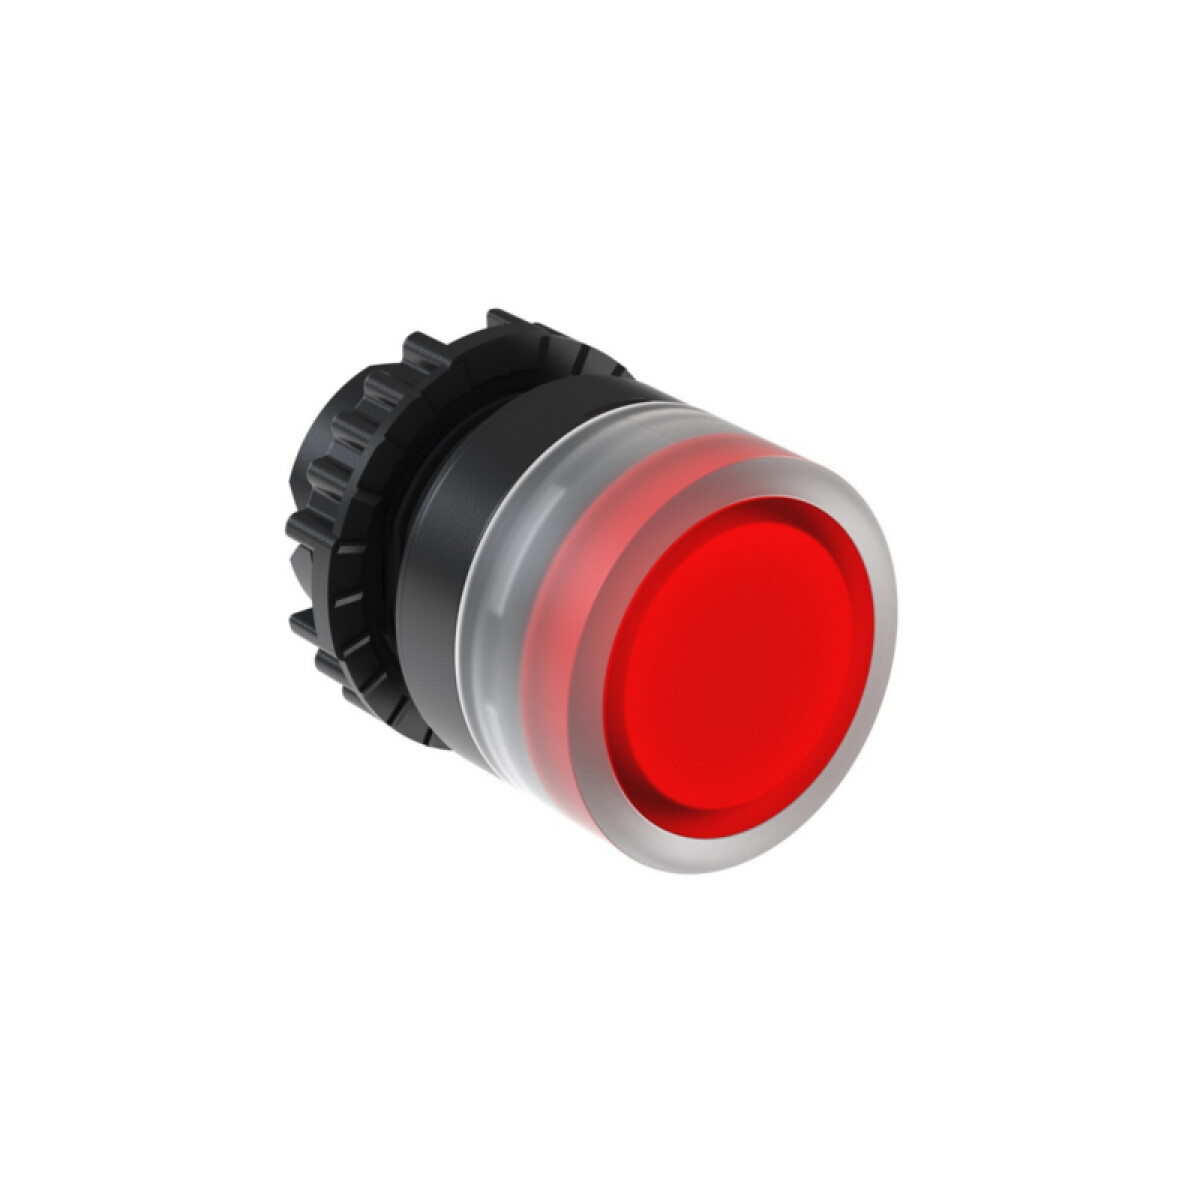 Cabezal pulsador ras. lum. rojo Ø22mm IP66, BFI1 - WE5051 